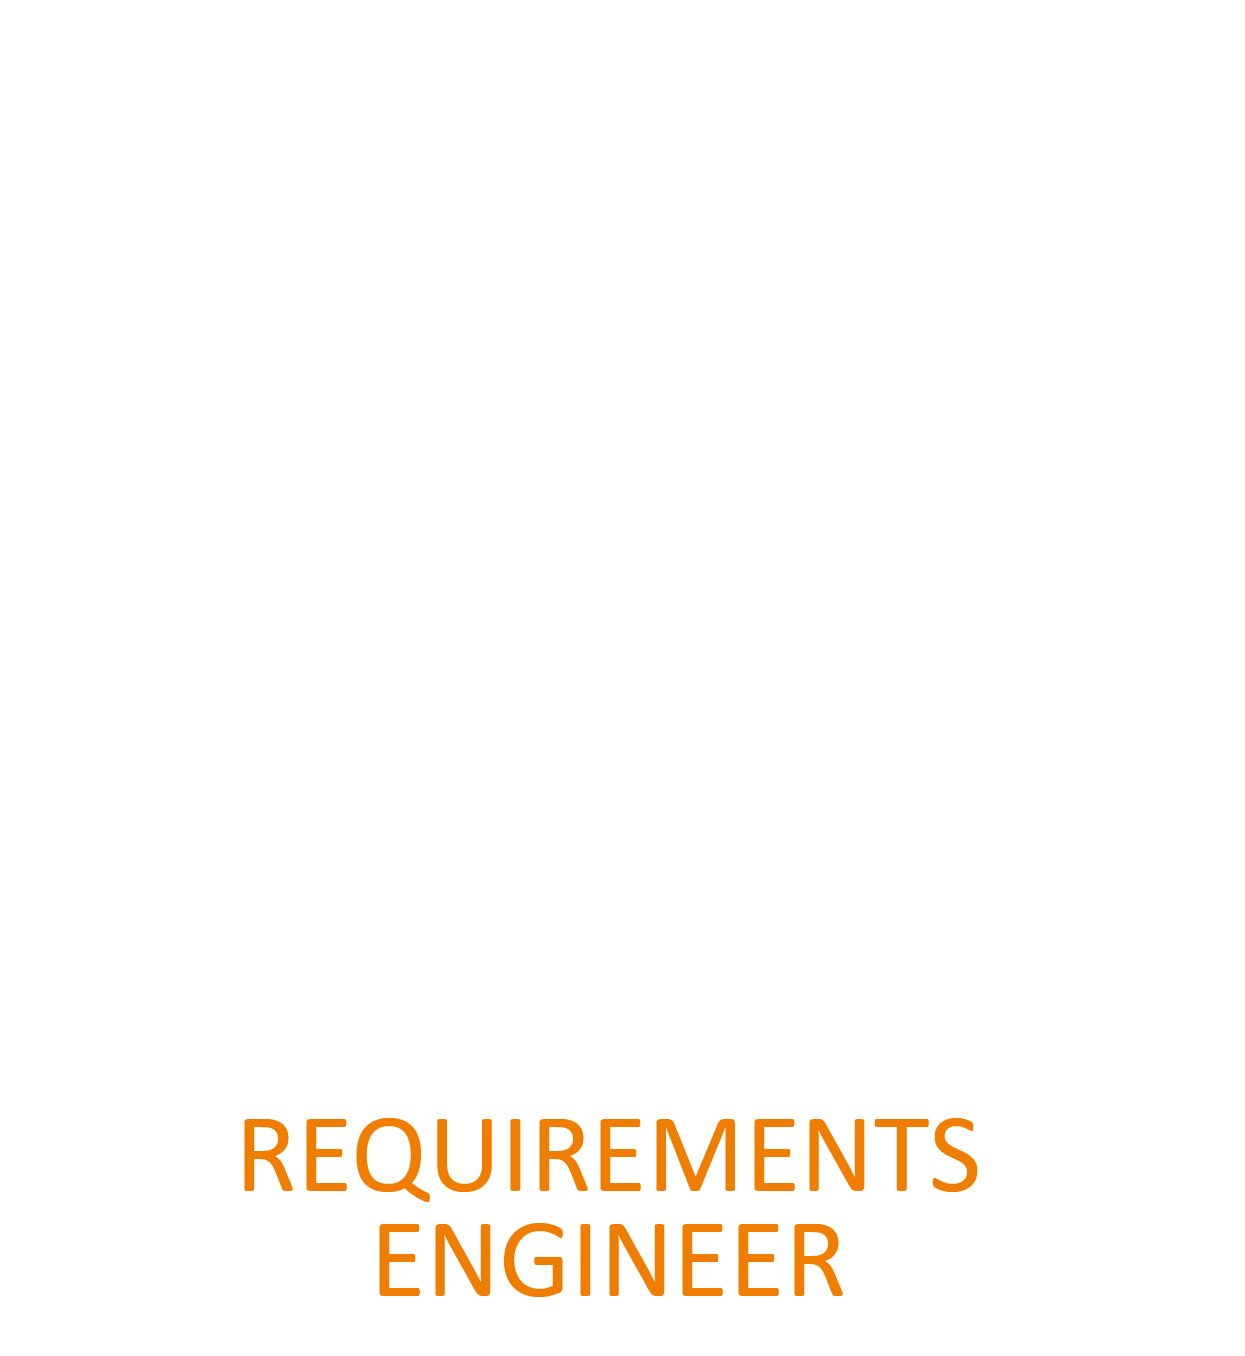 Requirements Engineer